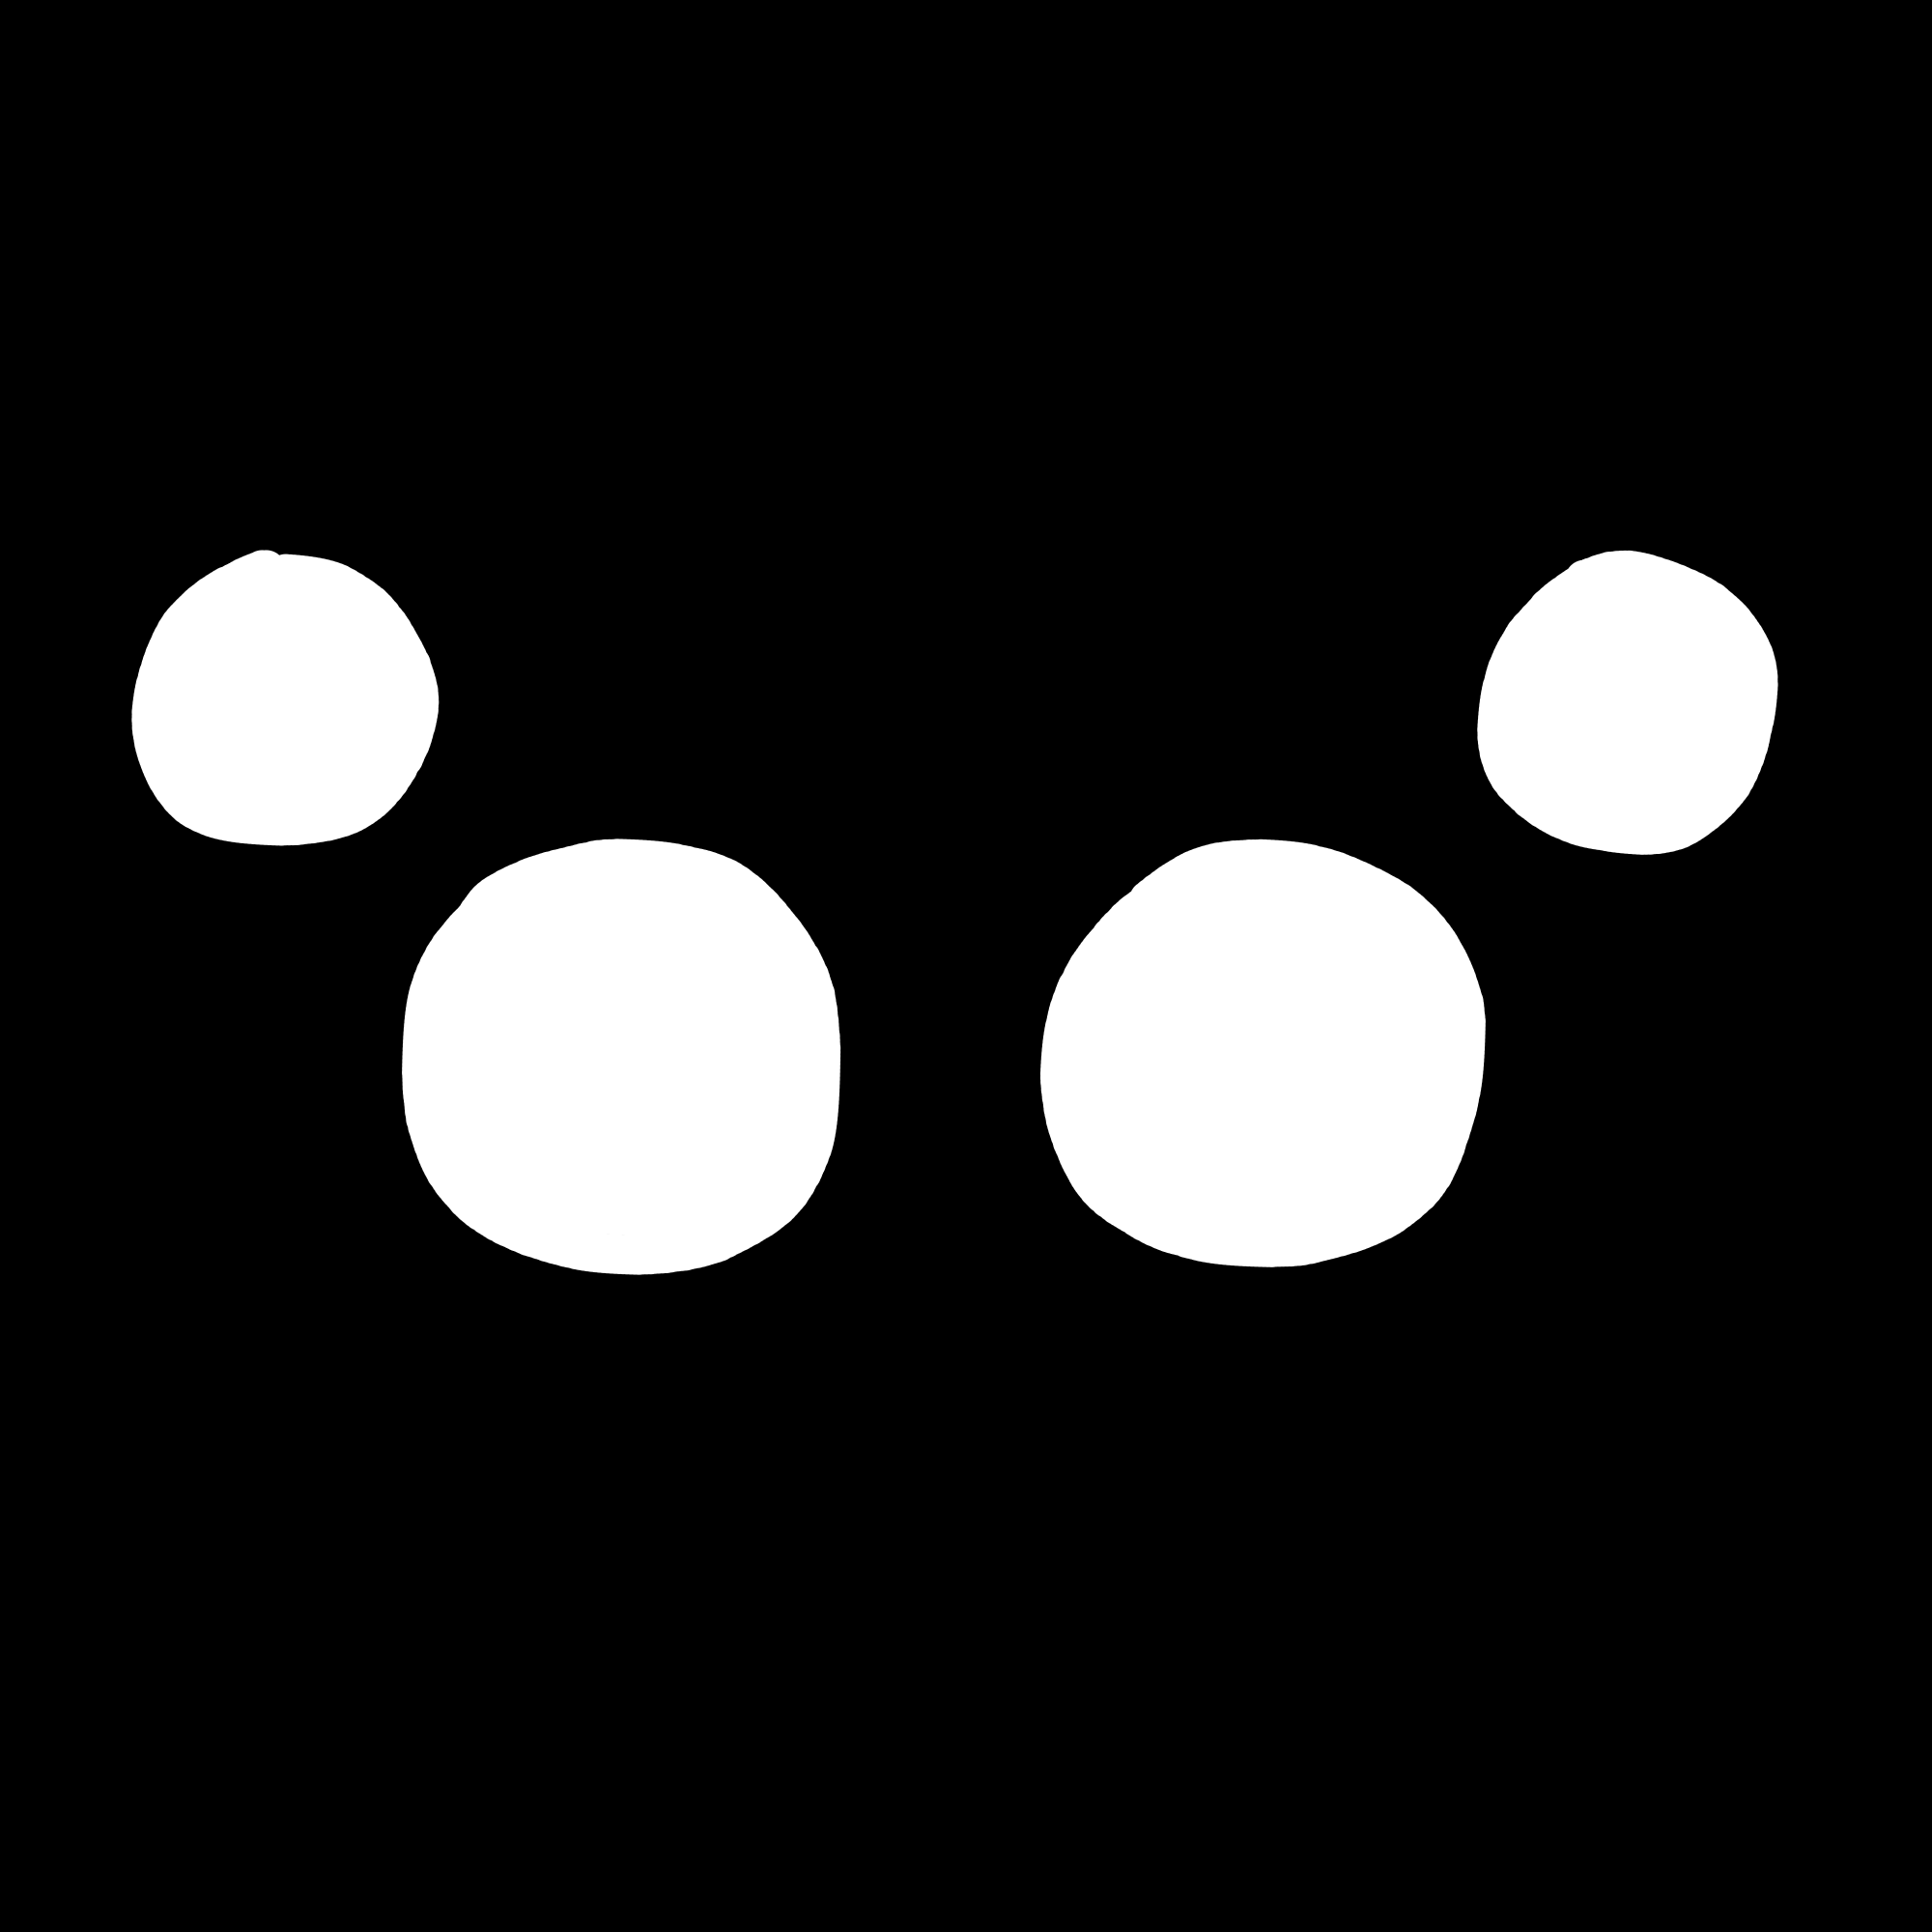 Minimalist logo of the spider avatar guy.